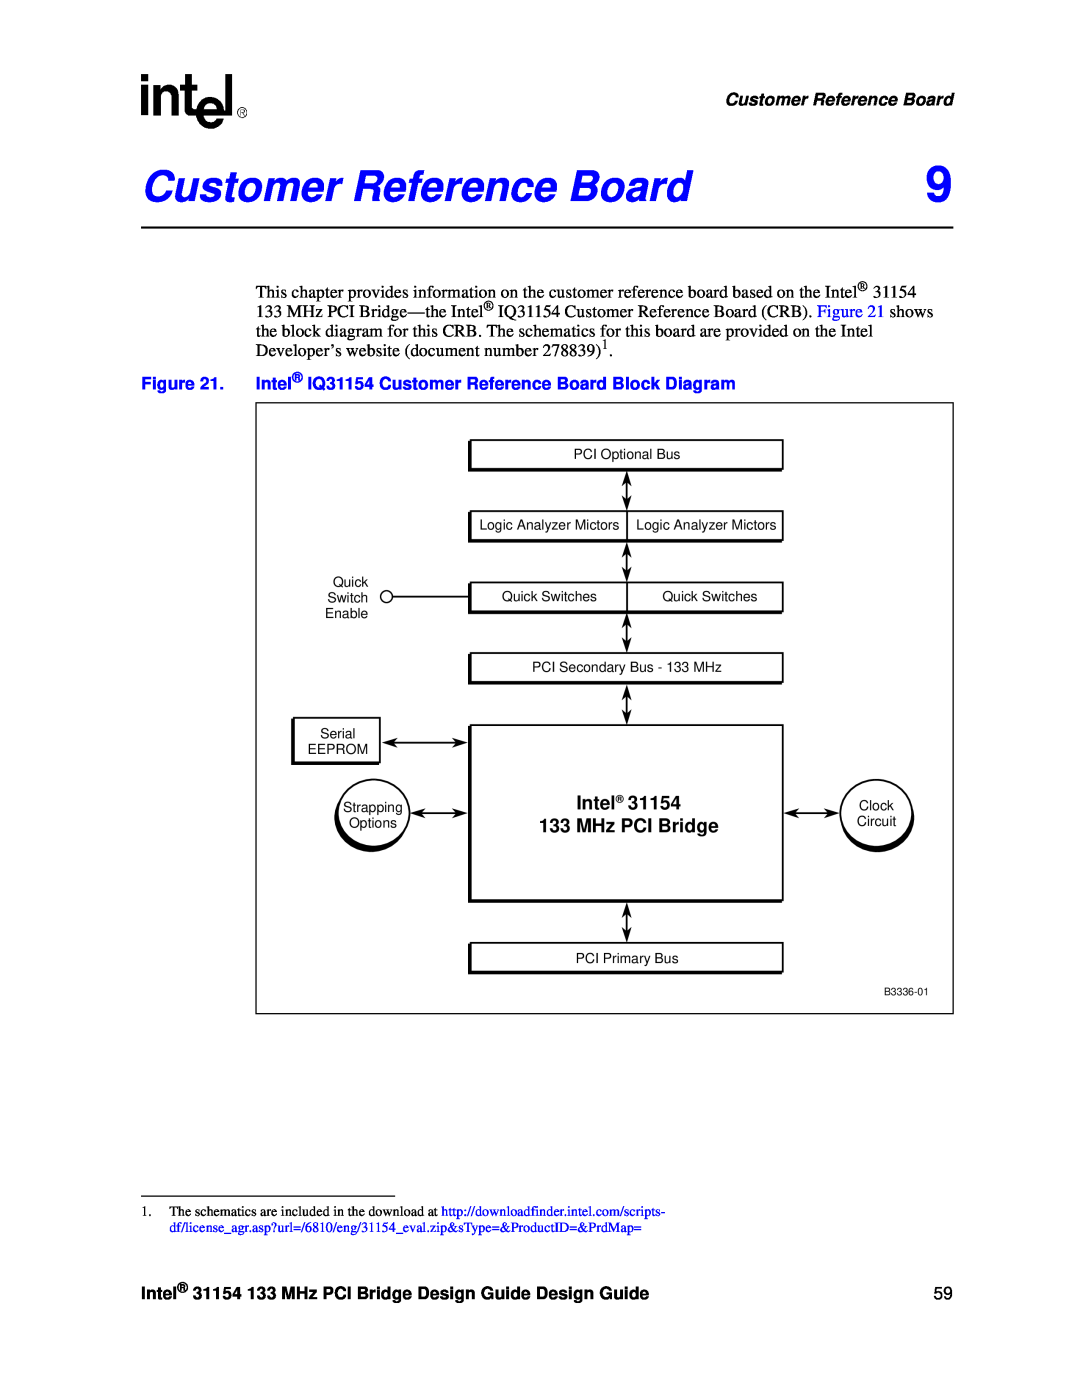 Intel manual MHz PCI Bridge, Intel IQ31154 Customer Reference Board Block Diagram 